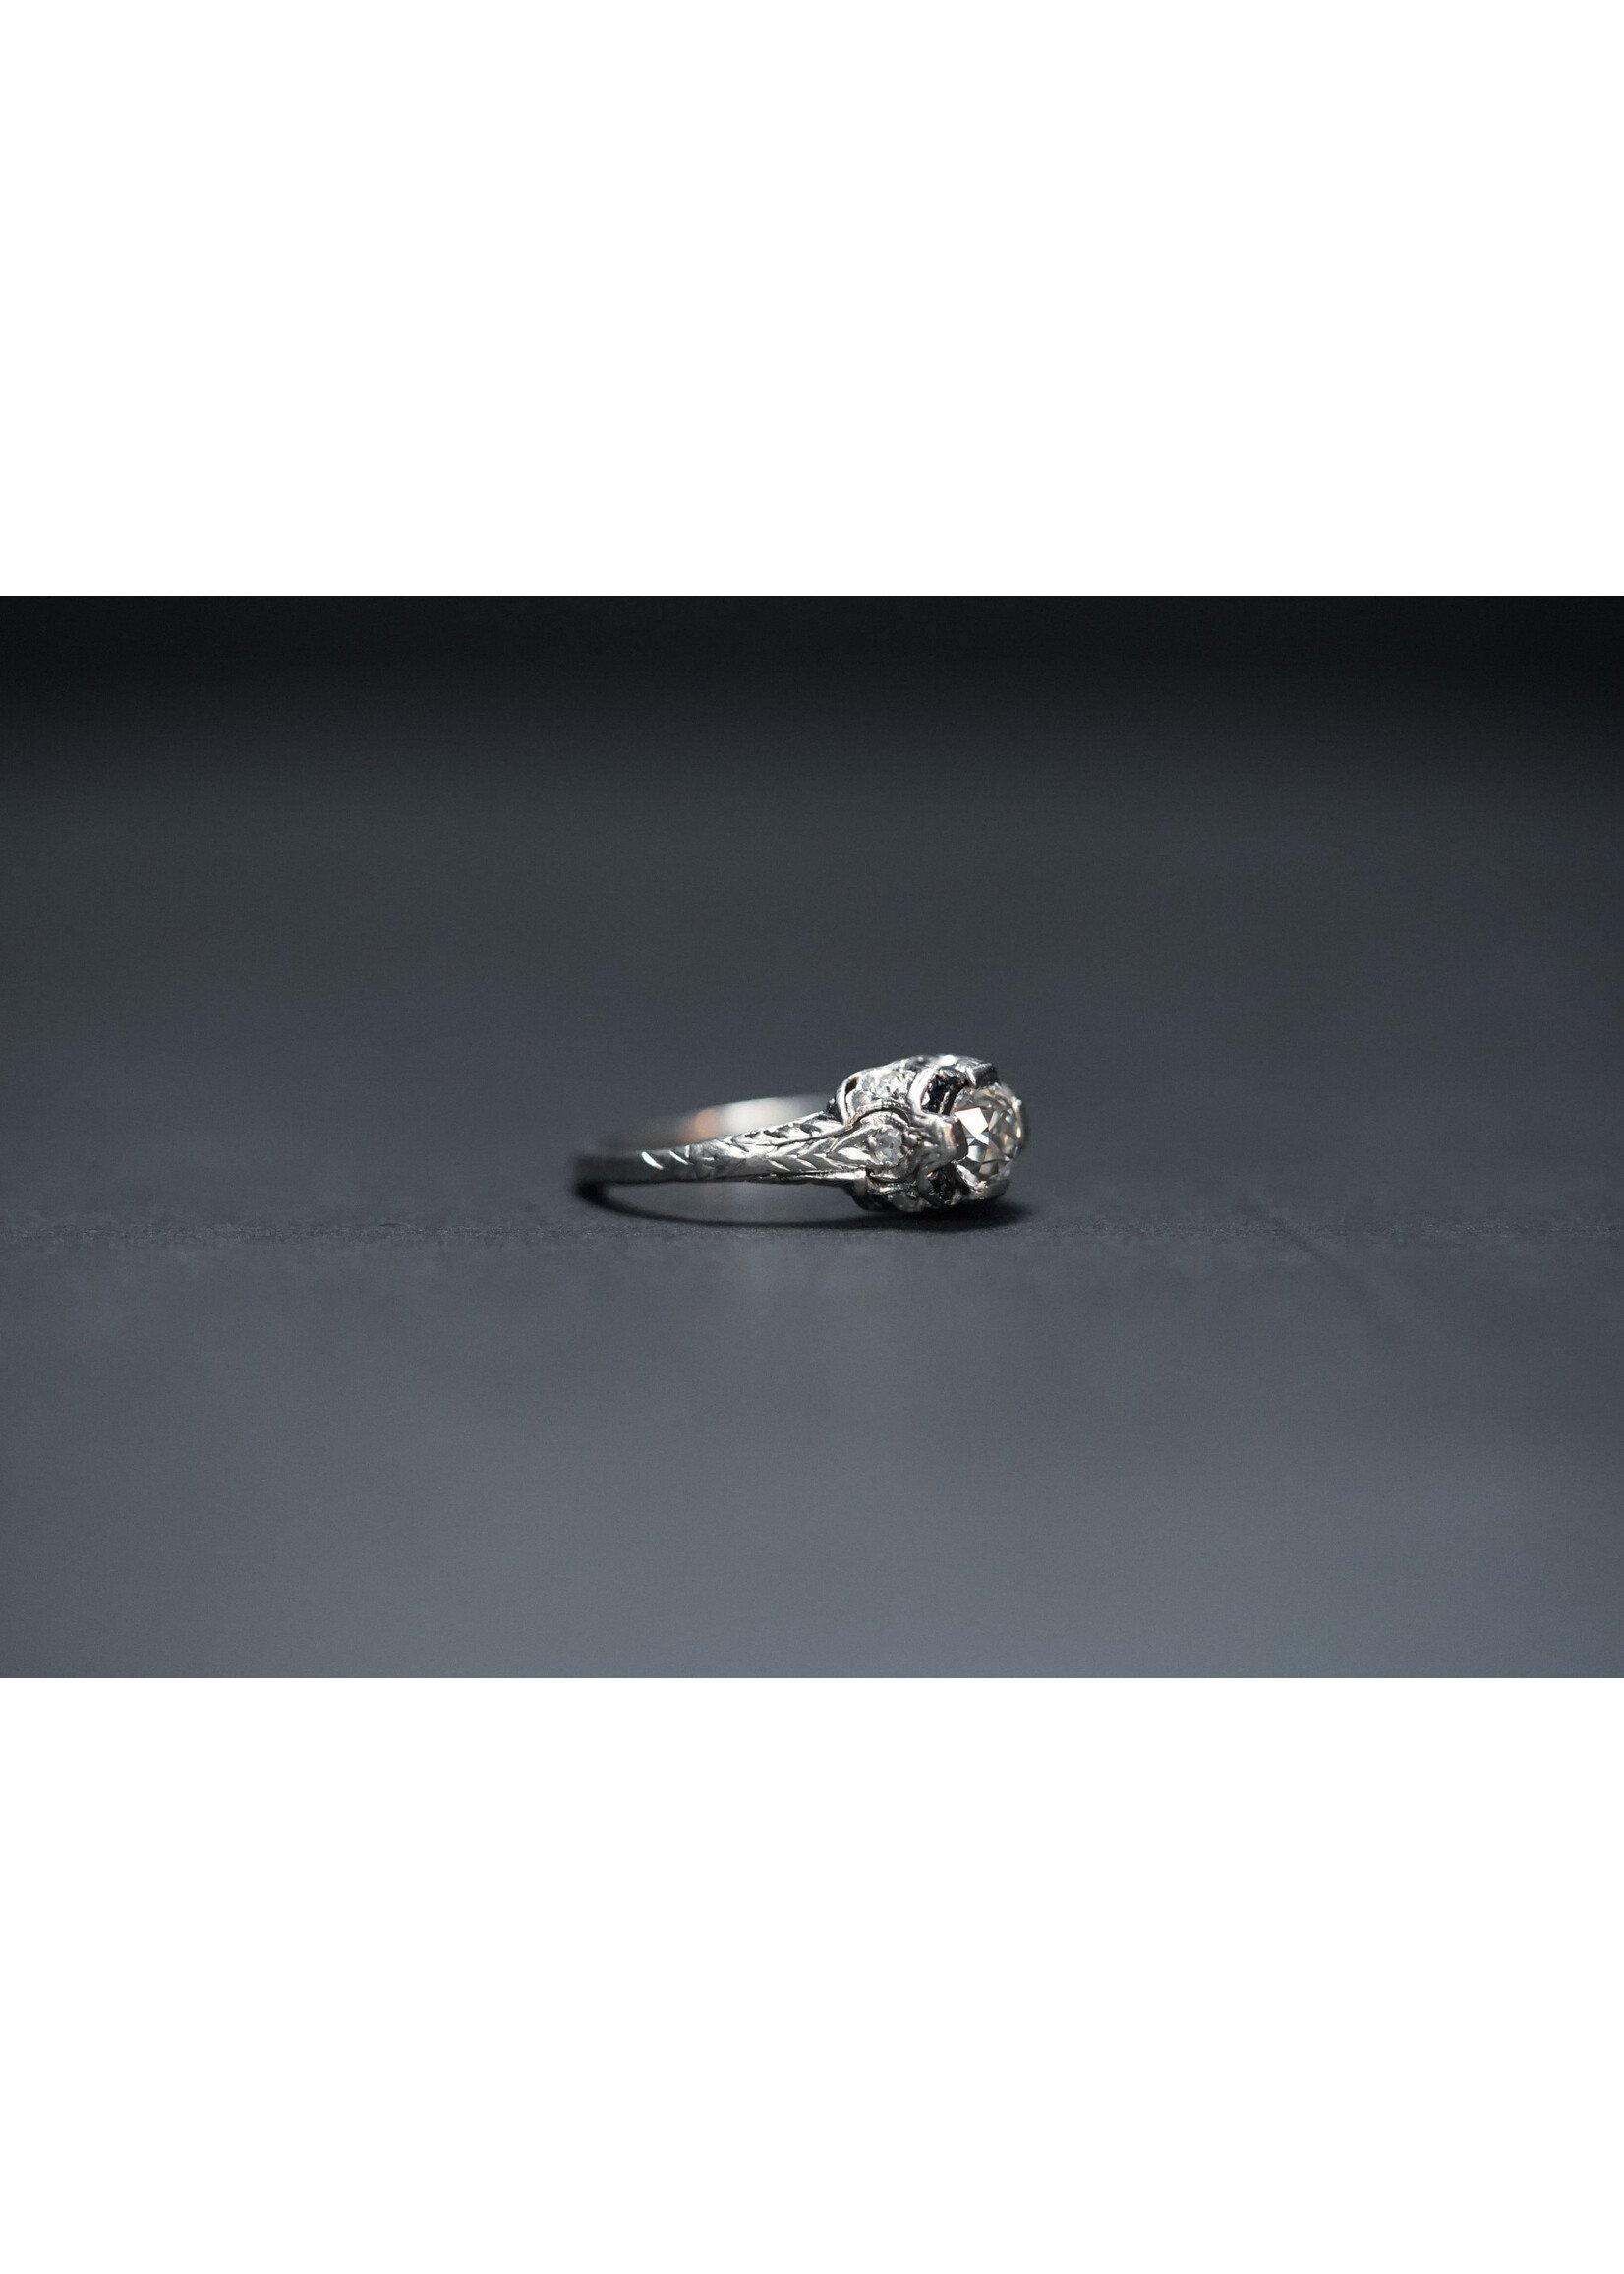 Platinum 4.36g .88ctw (.78ctr ) H/VS2 GIA European Cut Diamond & Sapphire Vintage Ring (size 7)